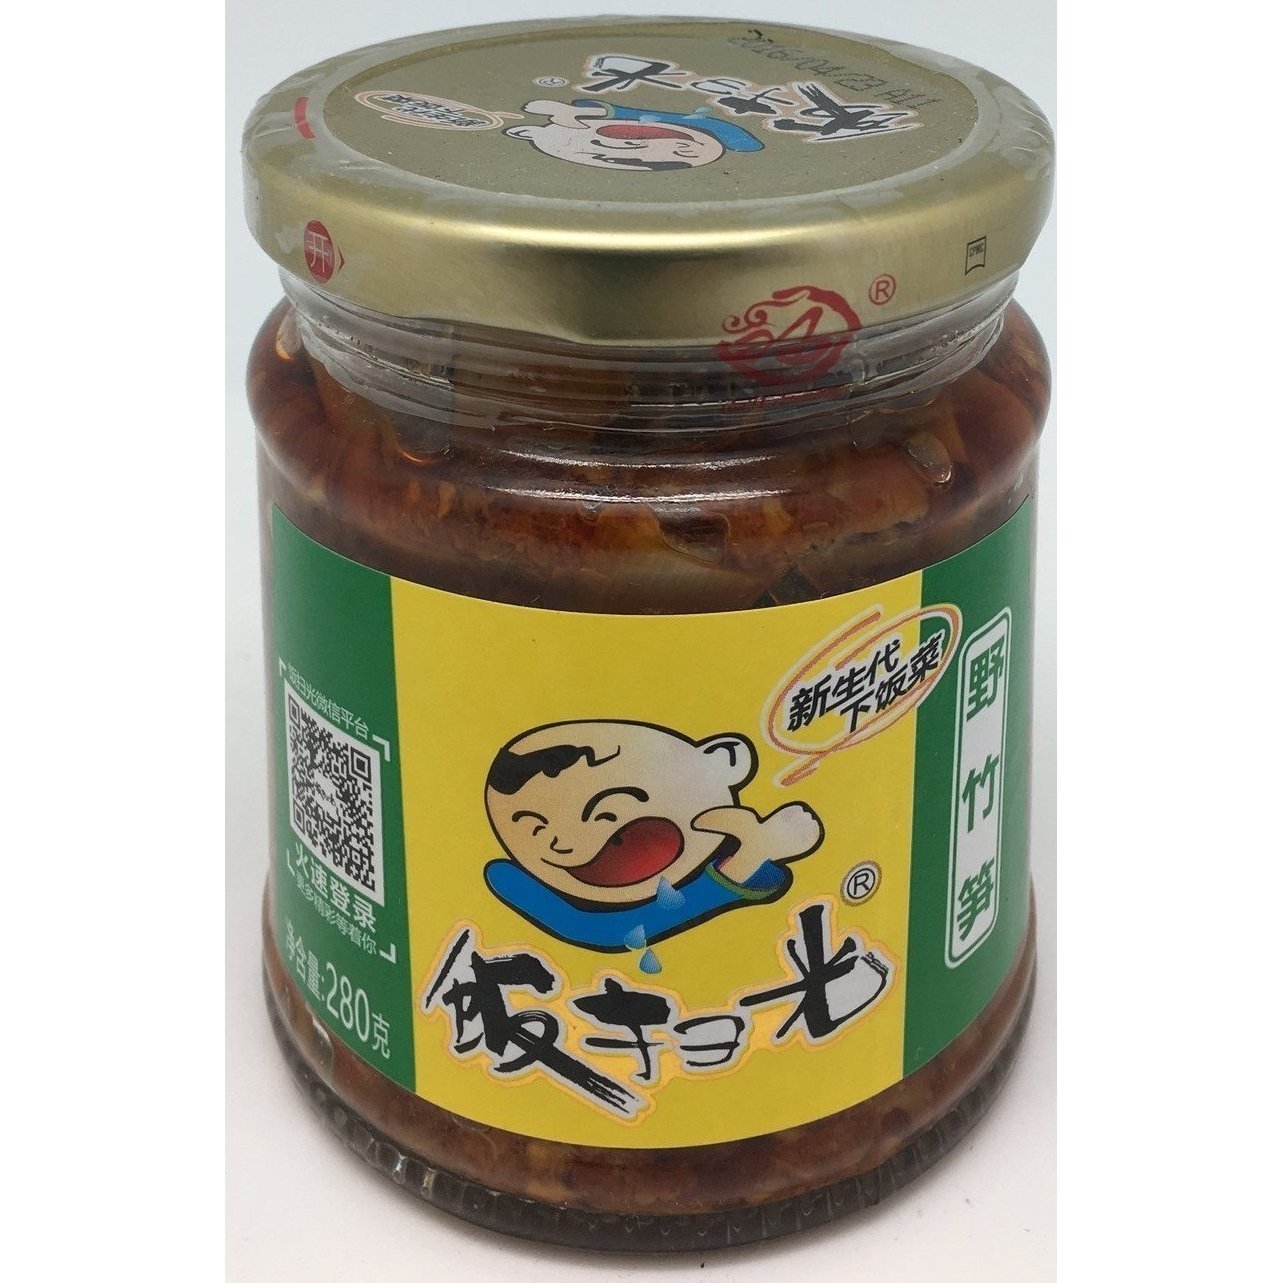 P009B Fan Sao Guang brand - Pickled Bamboo 280g - 12 jar / 1 CTN - New Eastland Pty Ltd - Asian food wholesalers